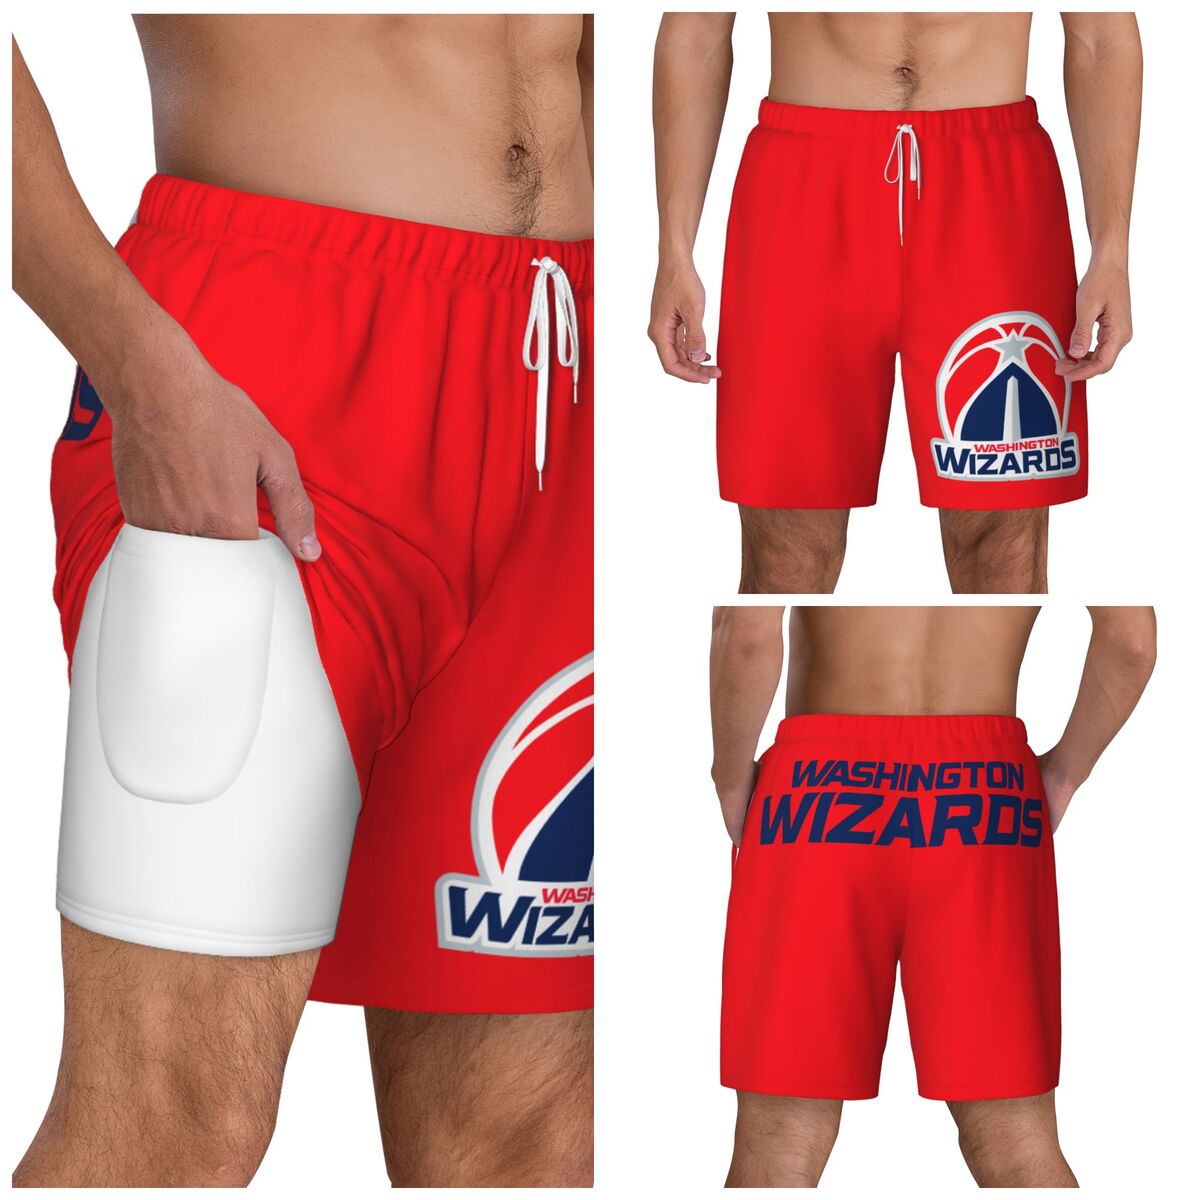 Washington Wizards Men's Swim Trunks with Compression Liner